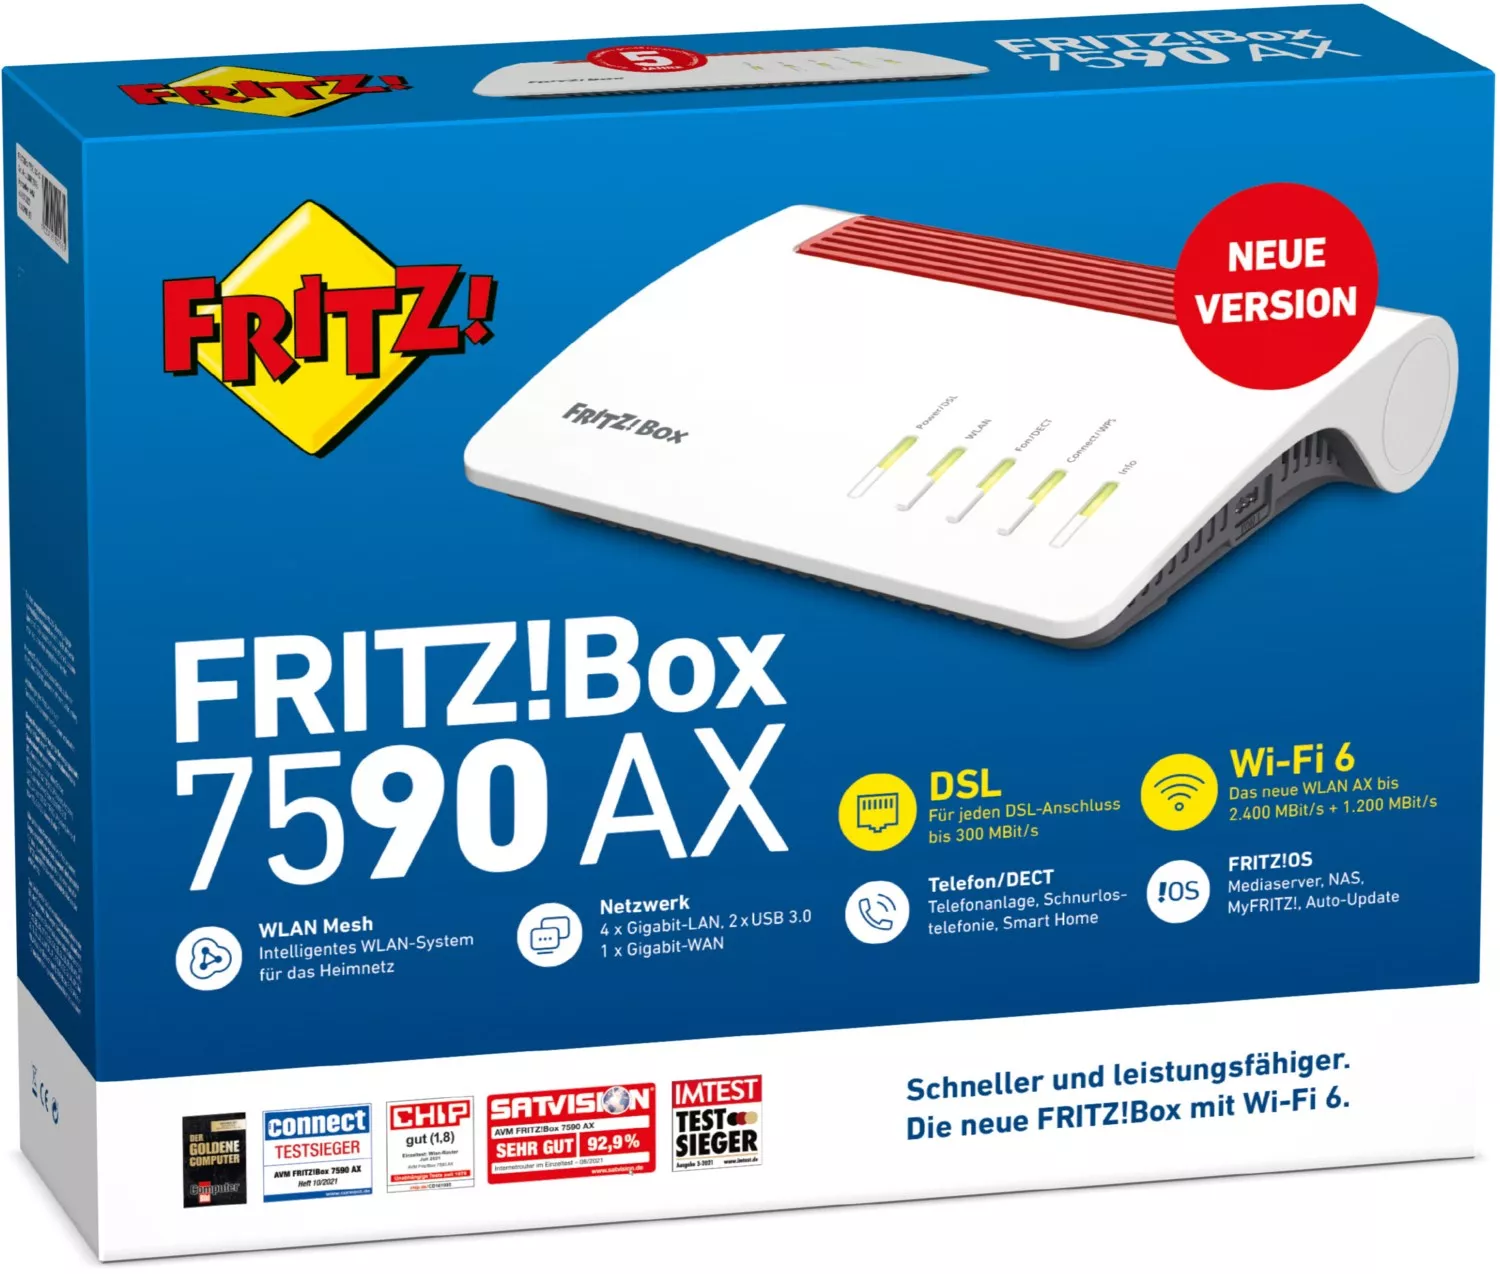 FRITZ!Box 7590 AX WLAN, Router